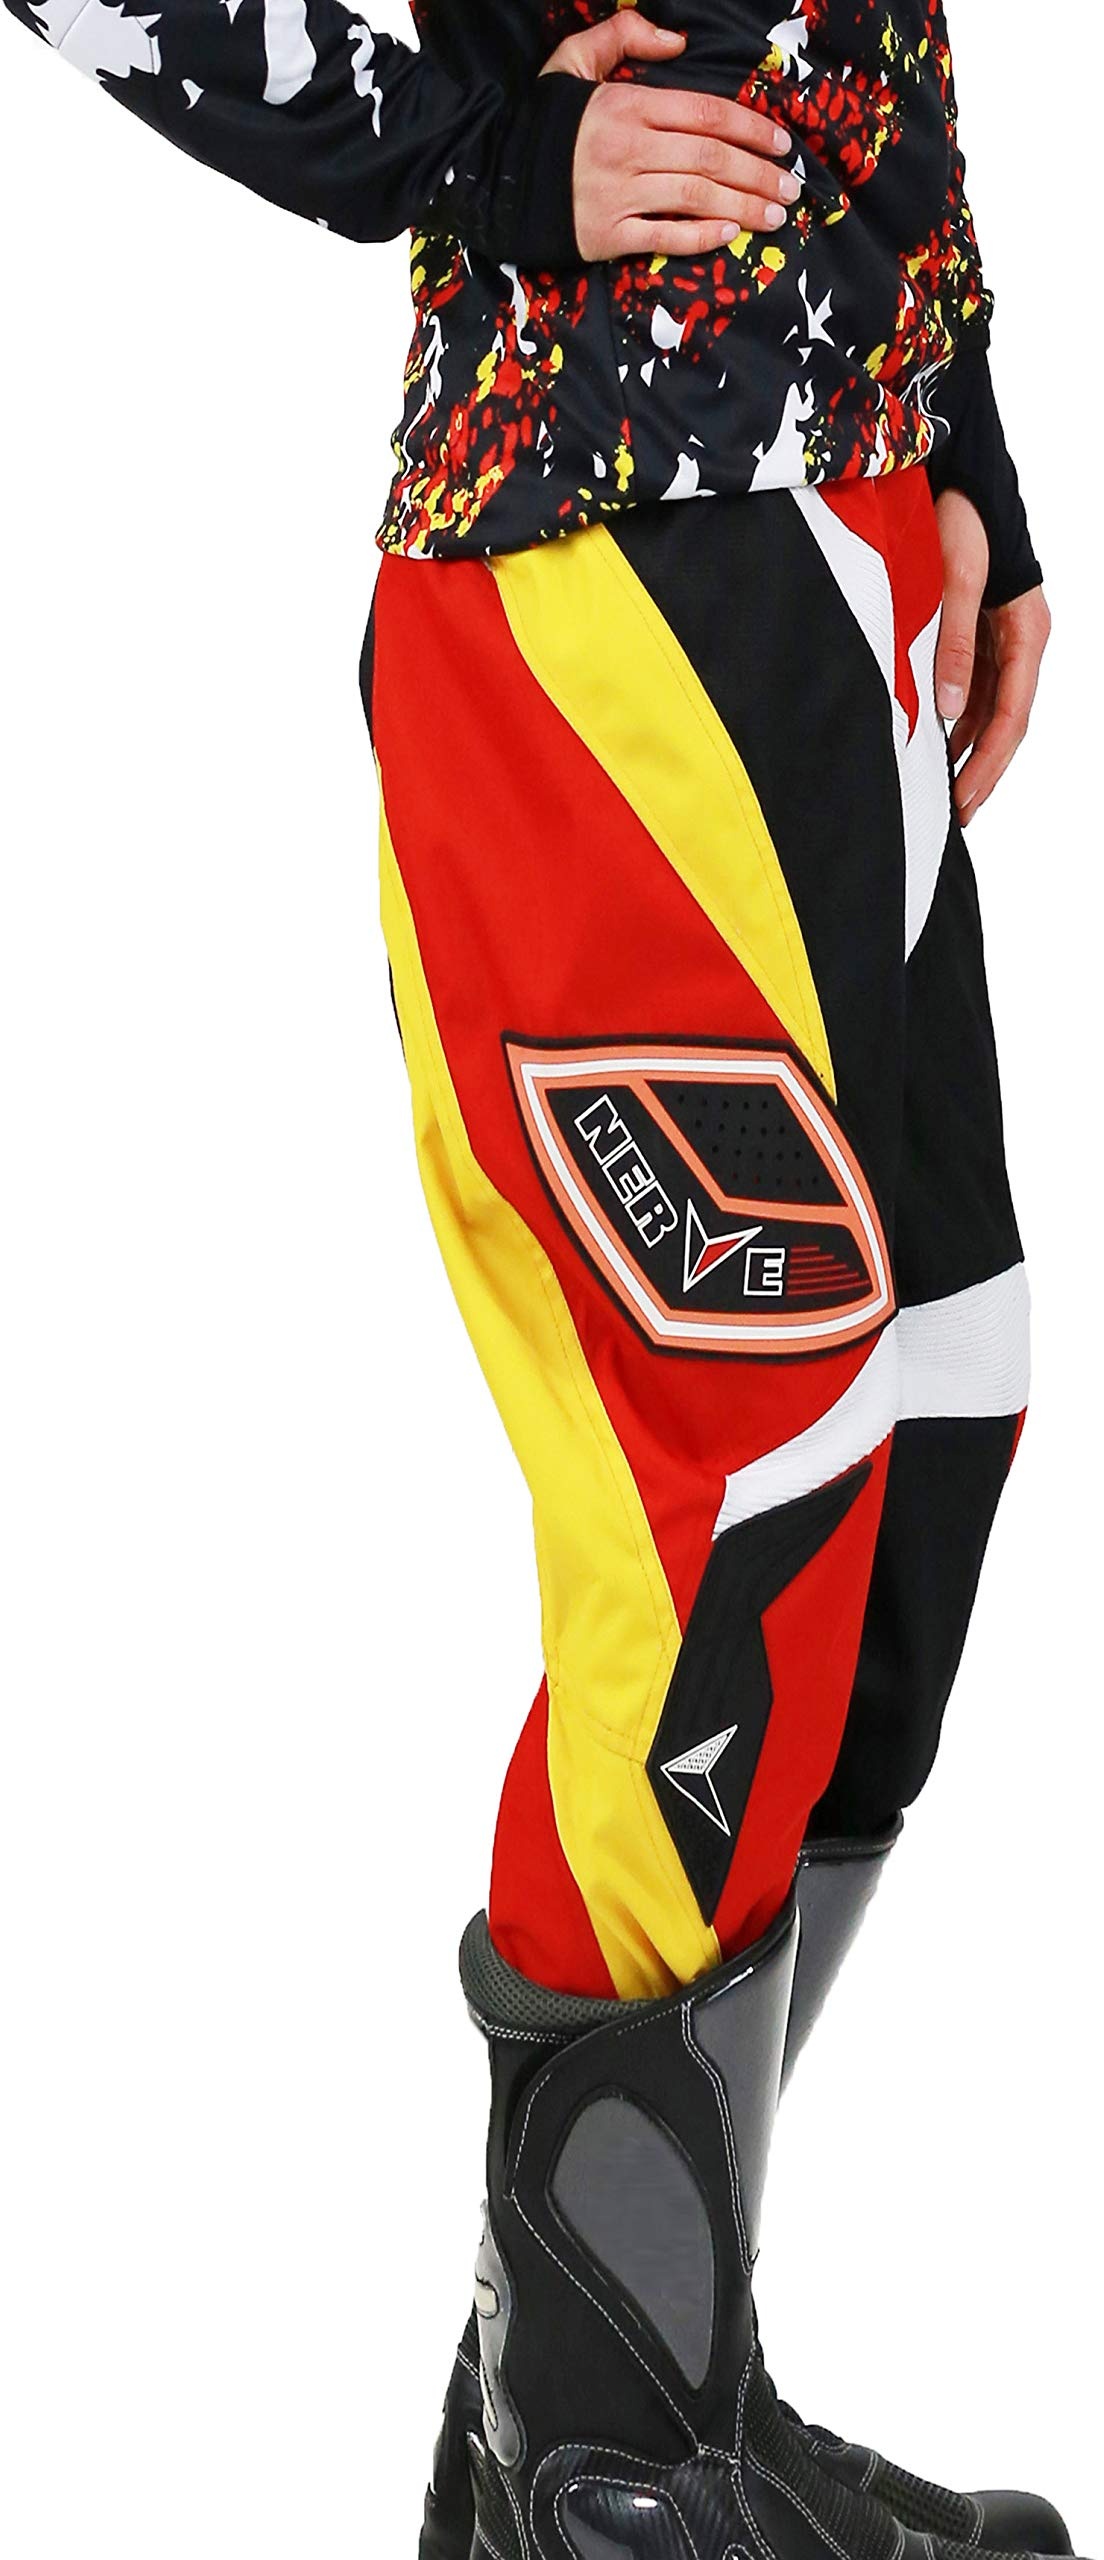 Nerve Shop Motocross Enduro Offroad Quad Cross Hose Herren Damen - schwarz-rot - M